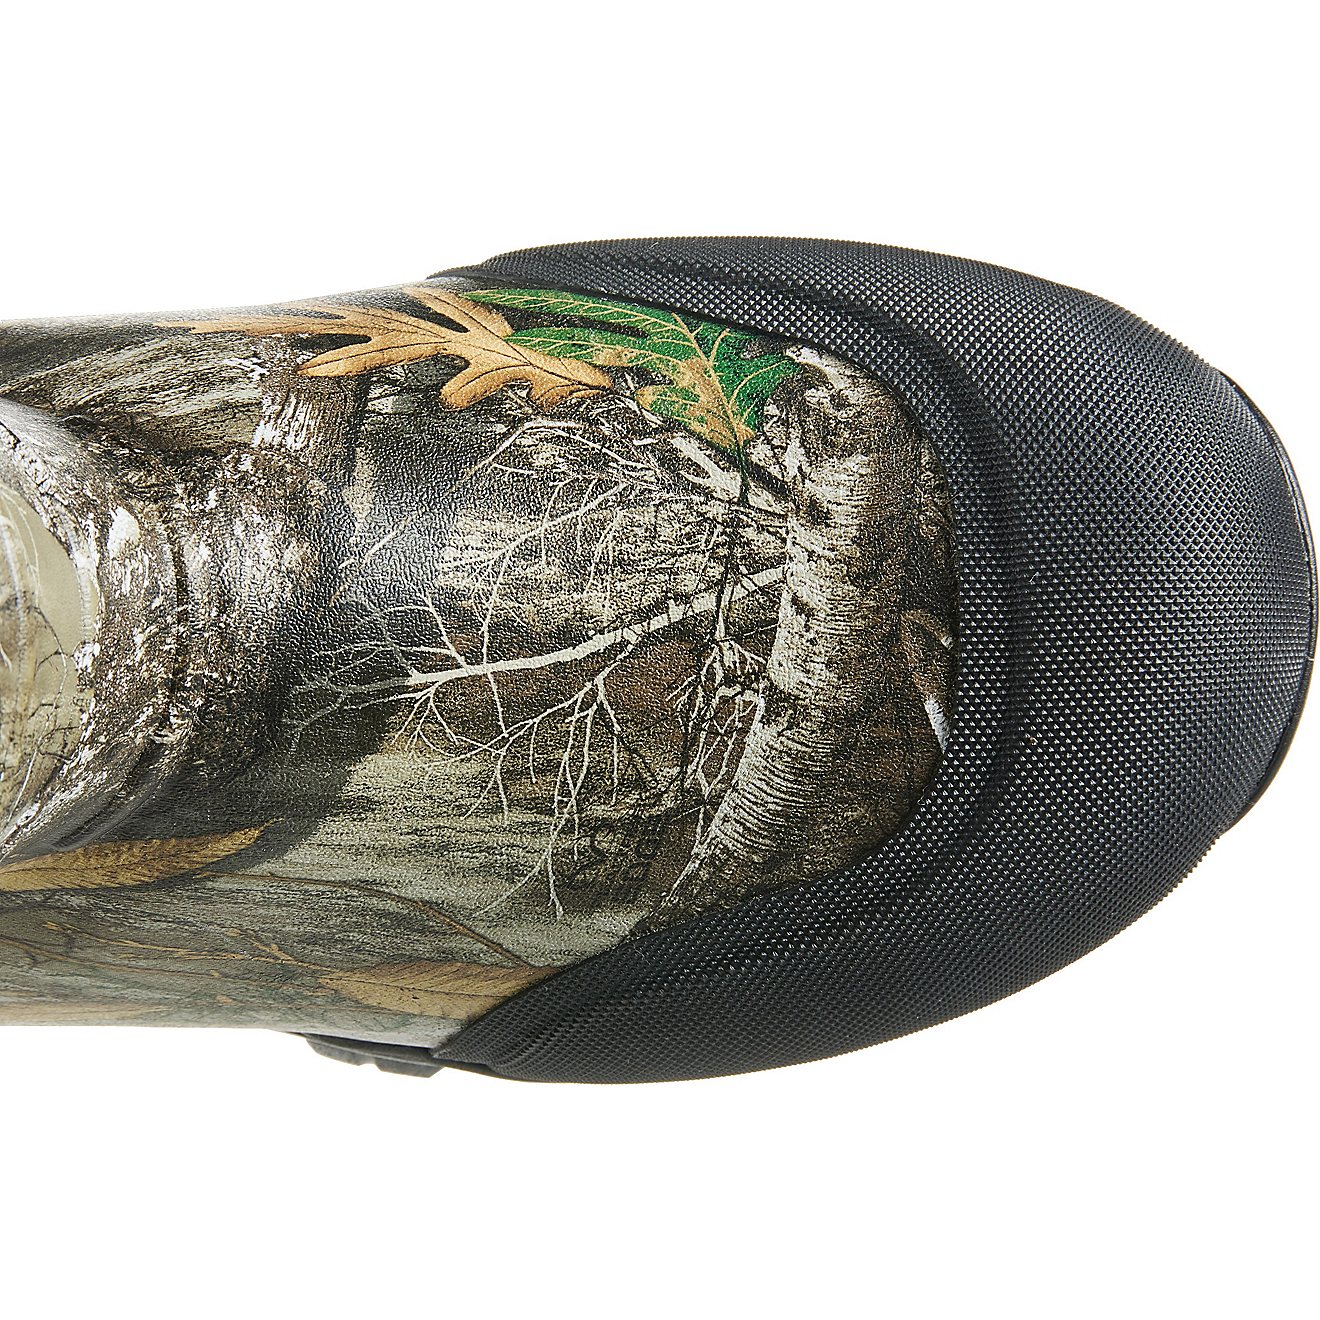 Magellan Outdoors Men's Swamp King 3.0 Insulated Boots | Academy